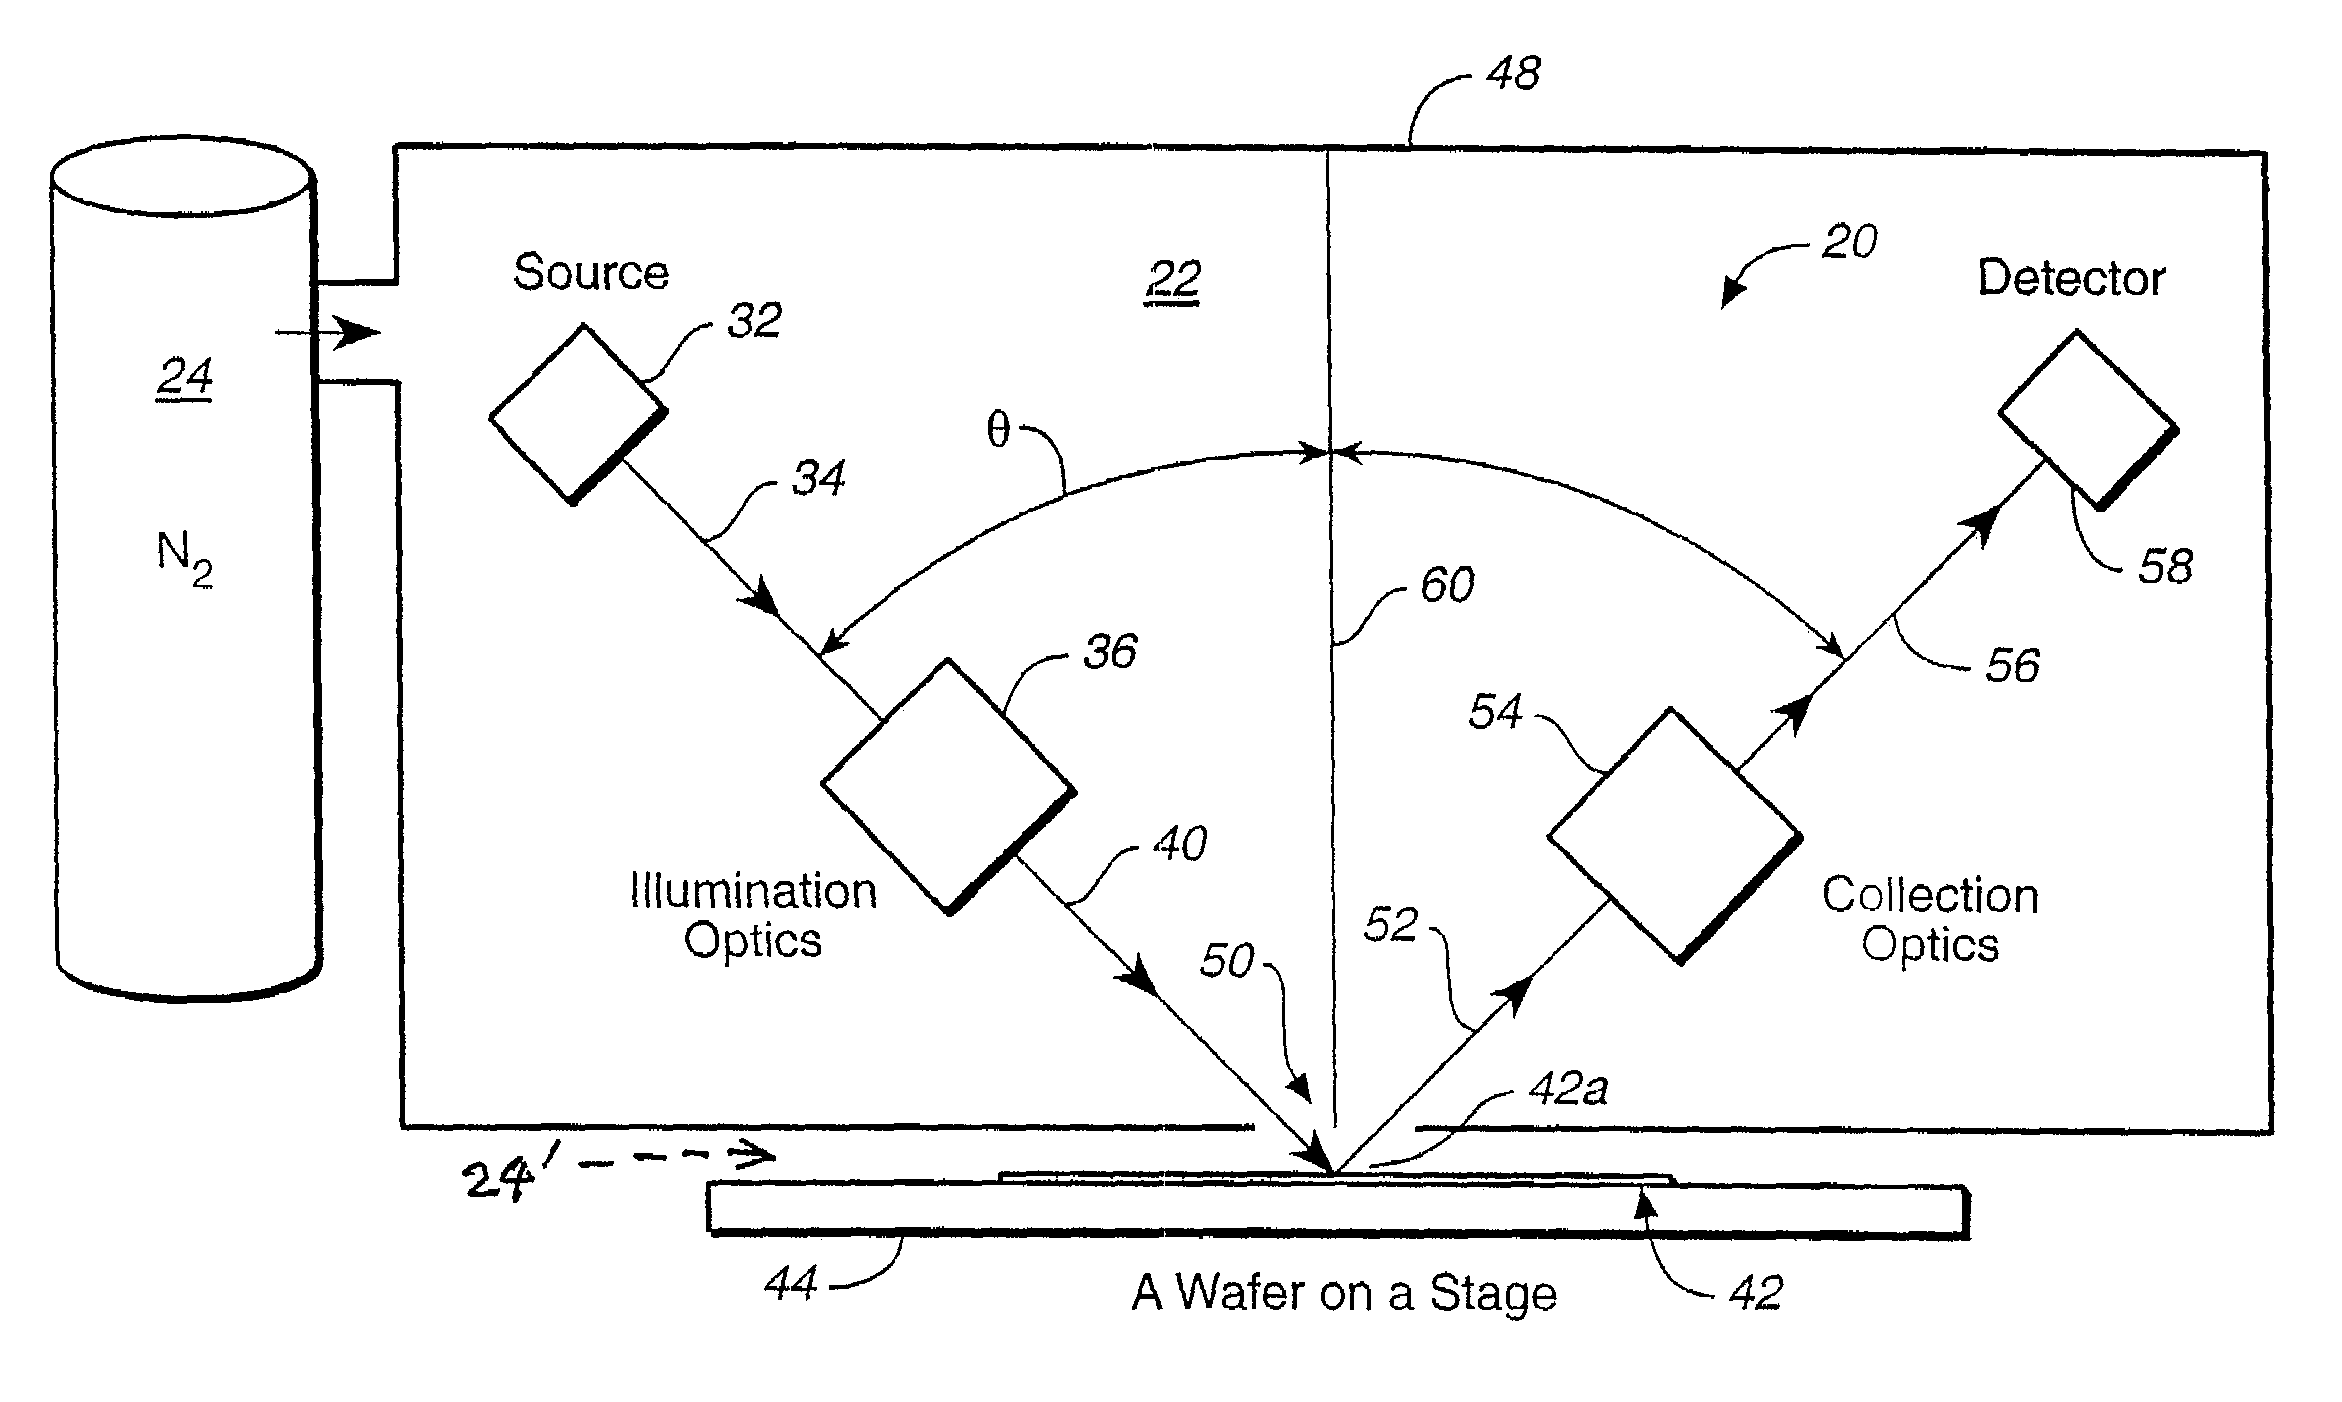 Optical system for measuring samples using short wavelength radiation